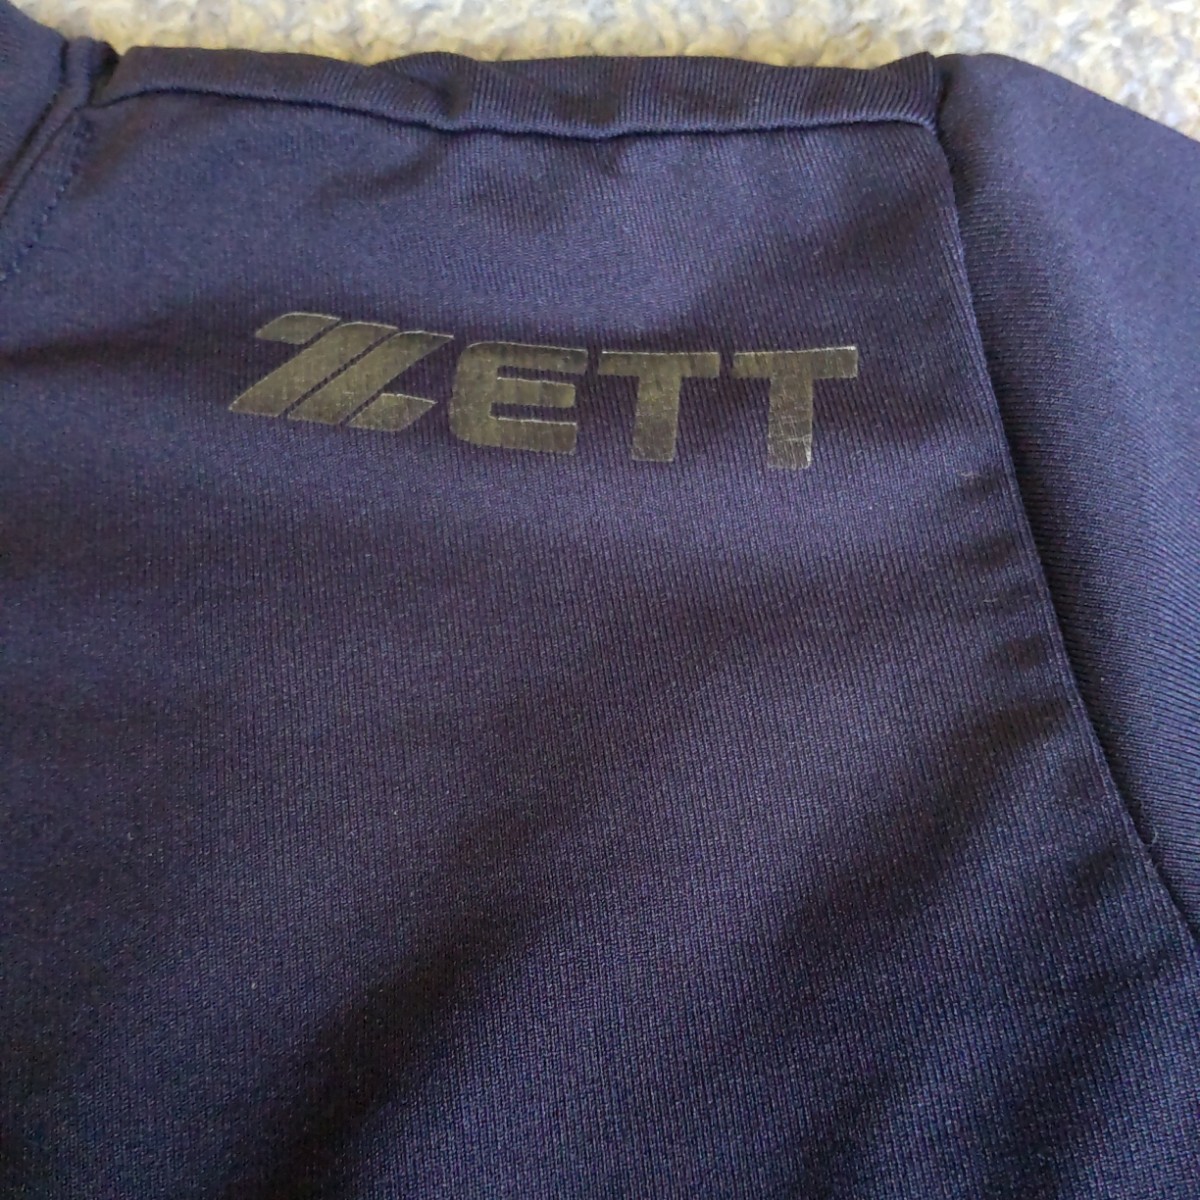 zett アンダーシャツ 半袖 130 野球 インナーシャツ